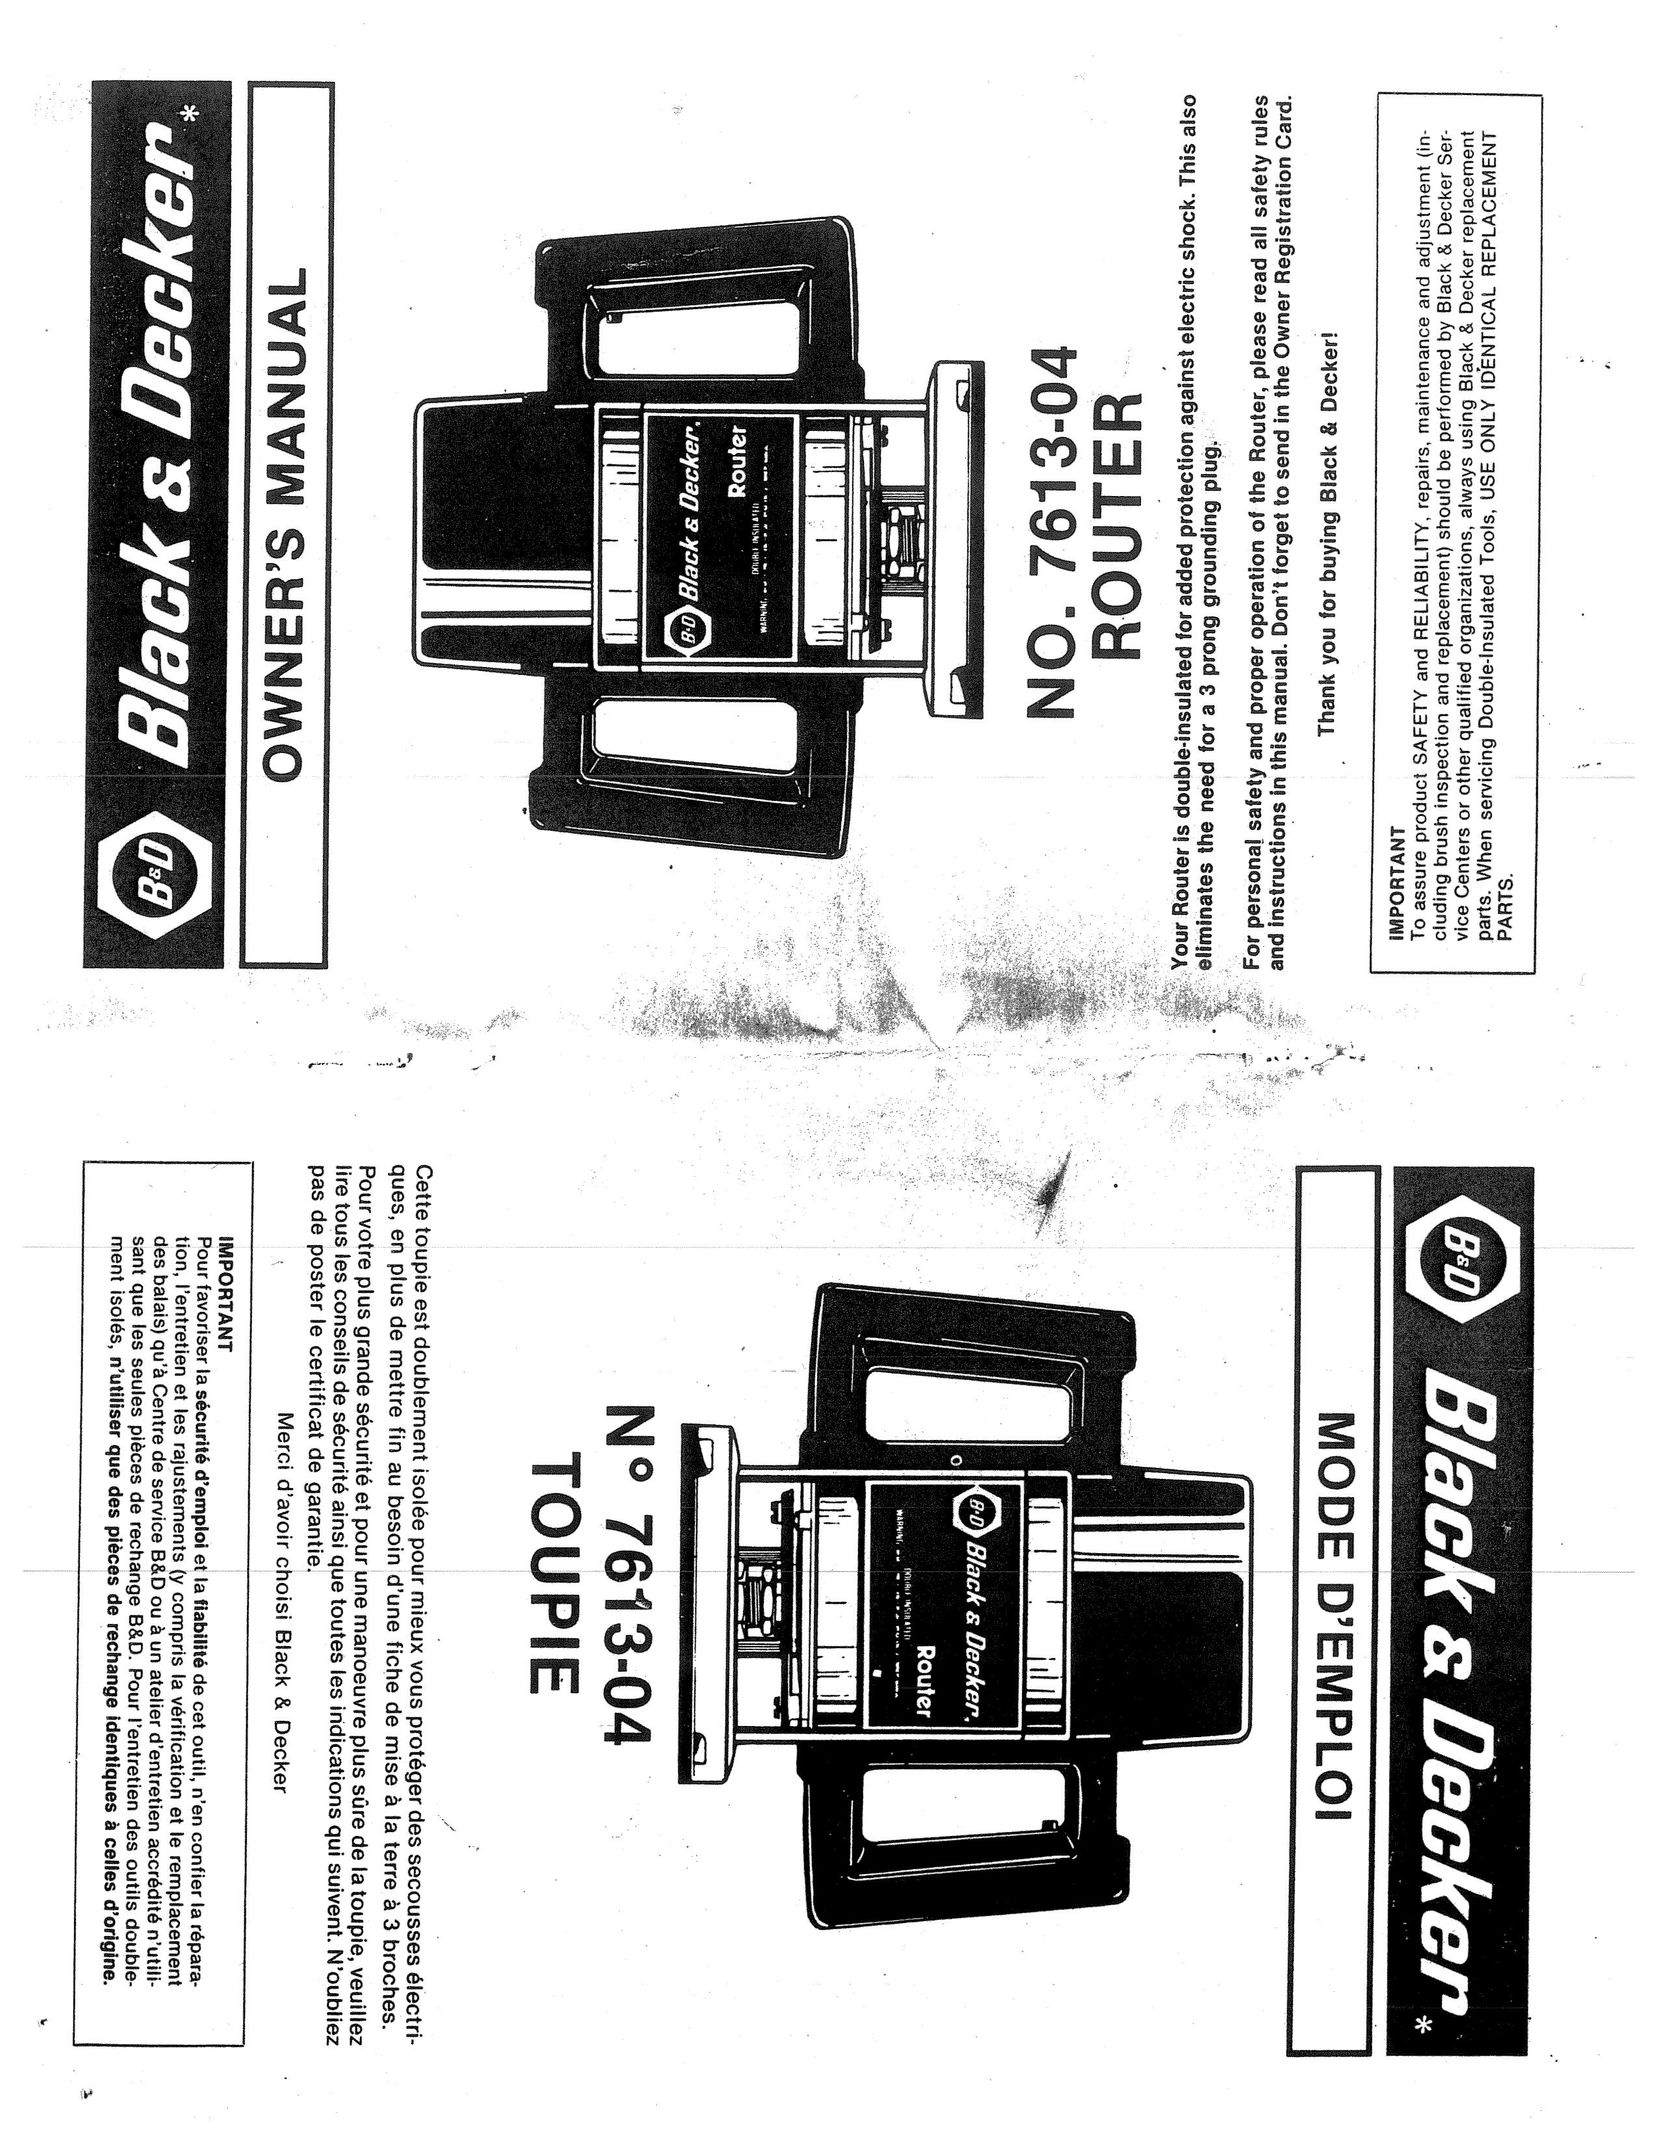 Black & Decker 7613-04 Router User Manual